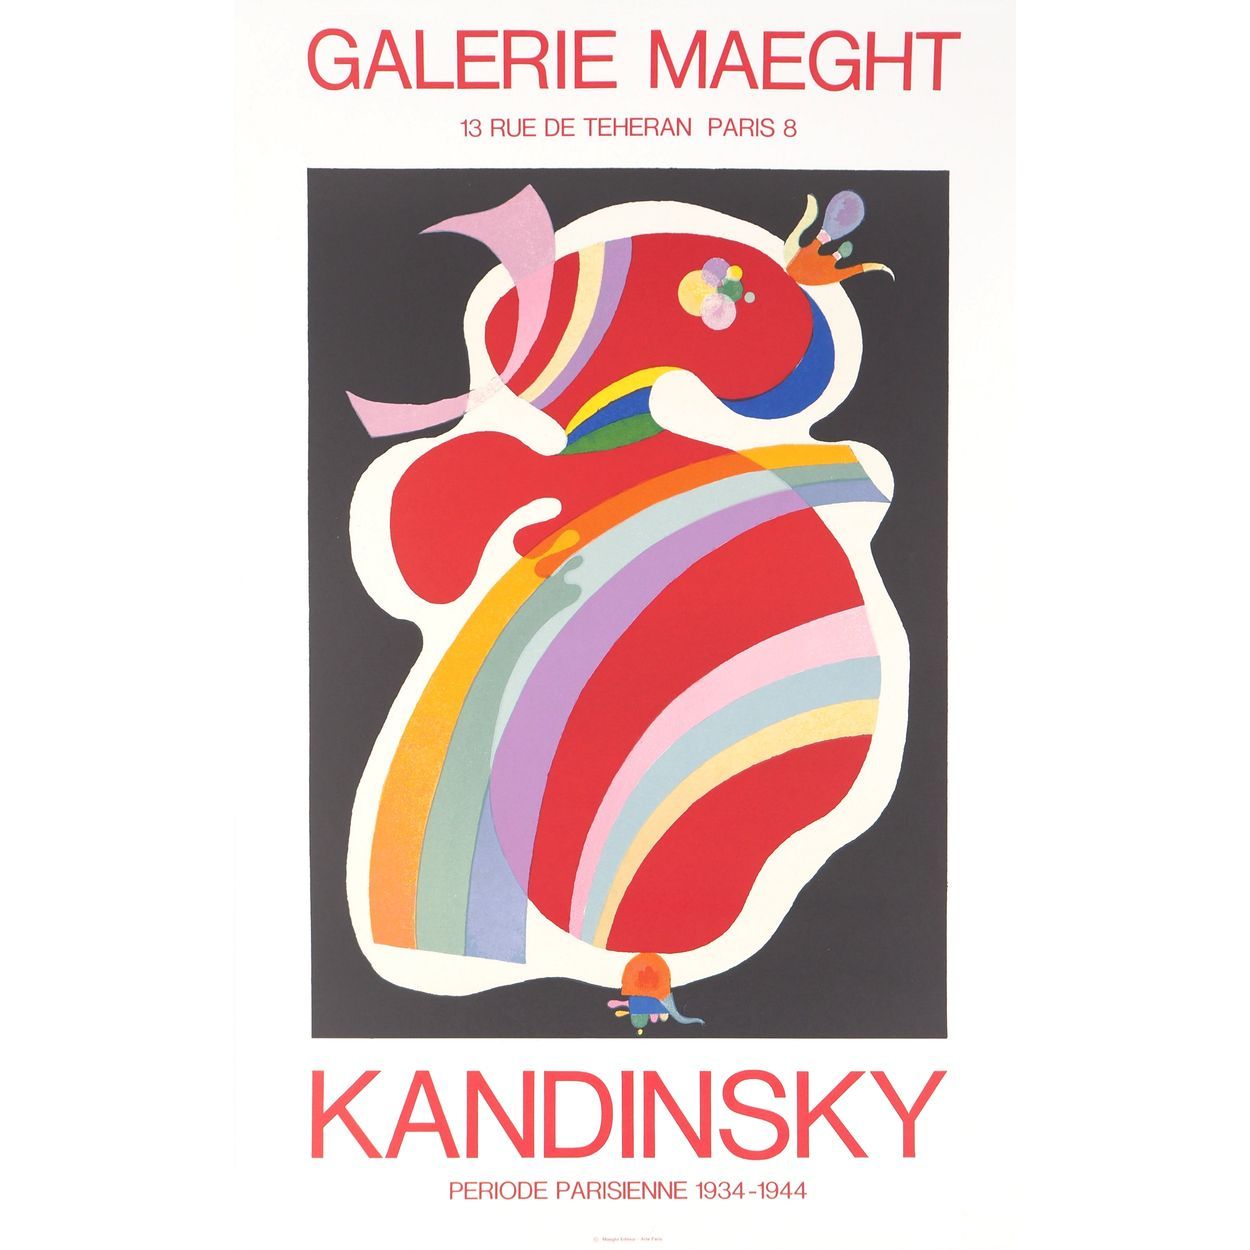 Vassily KANDINSKY Wassily KANDINSKY

巴黎时期

这一时期的原版石印海报

为在迈格特画廊举办的瓦西里-康定斯基的展览而作。&hellip;